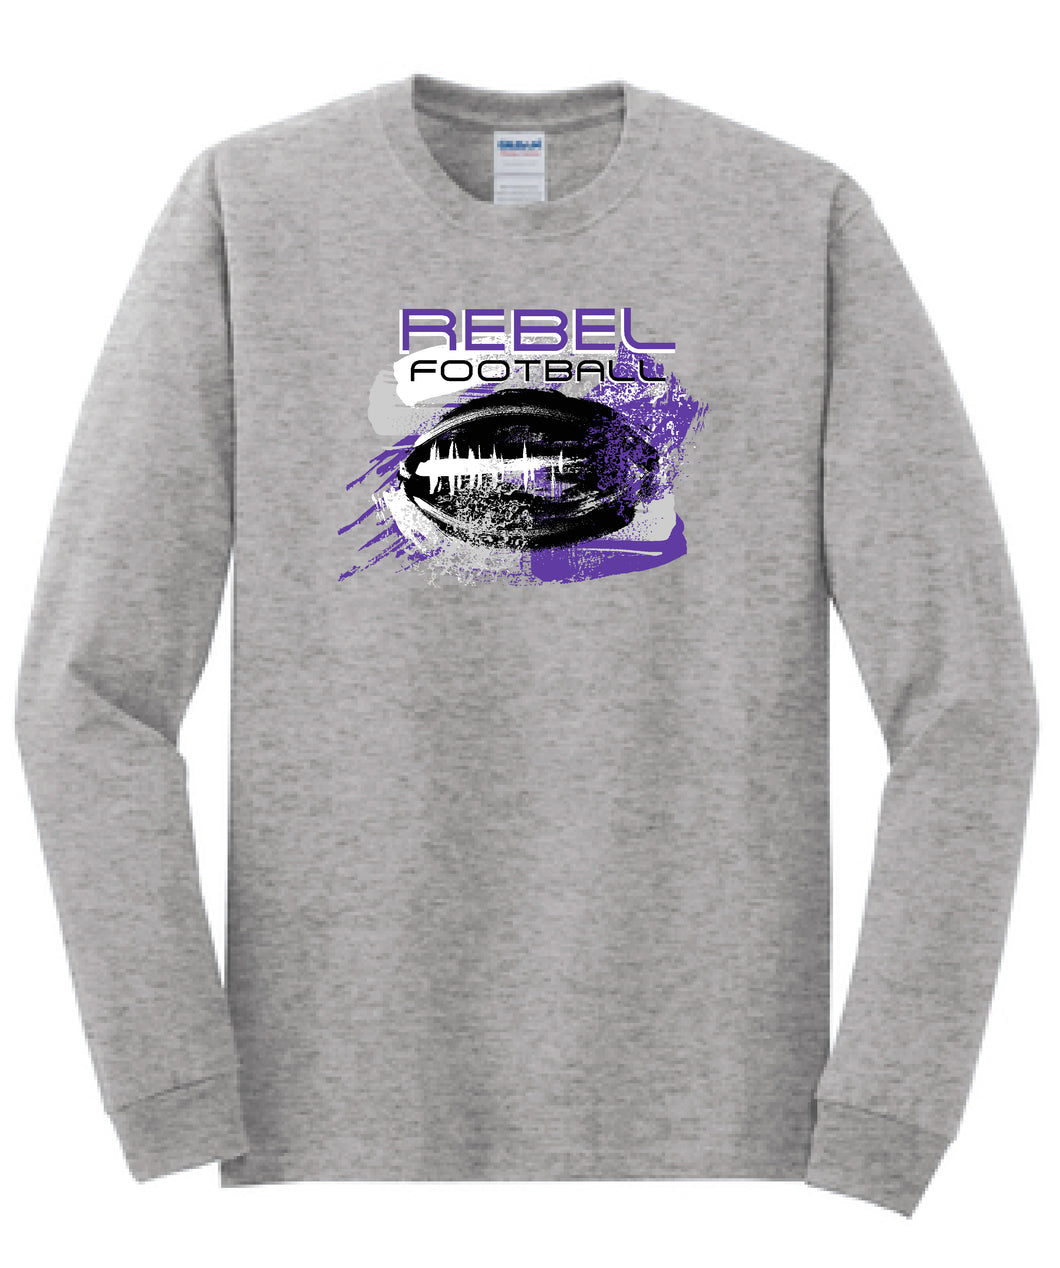 MCC Rebels Football Comfort Colors - Colorblast Crewneck Sweatshirt